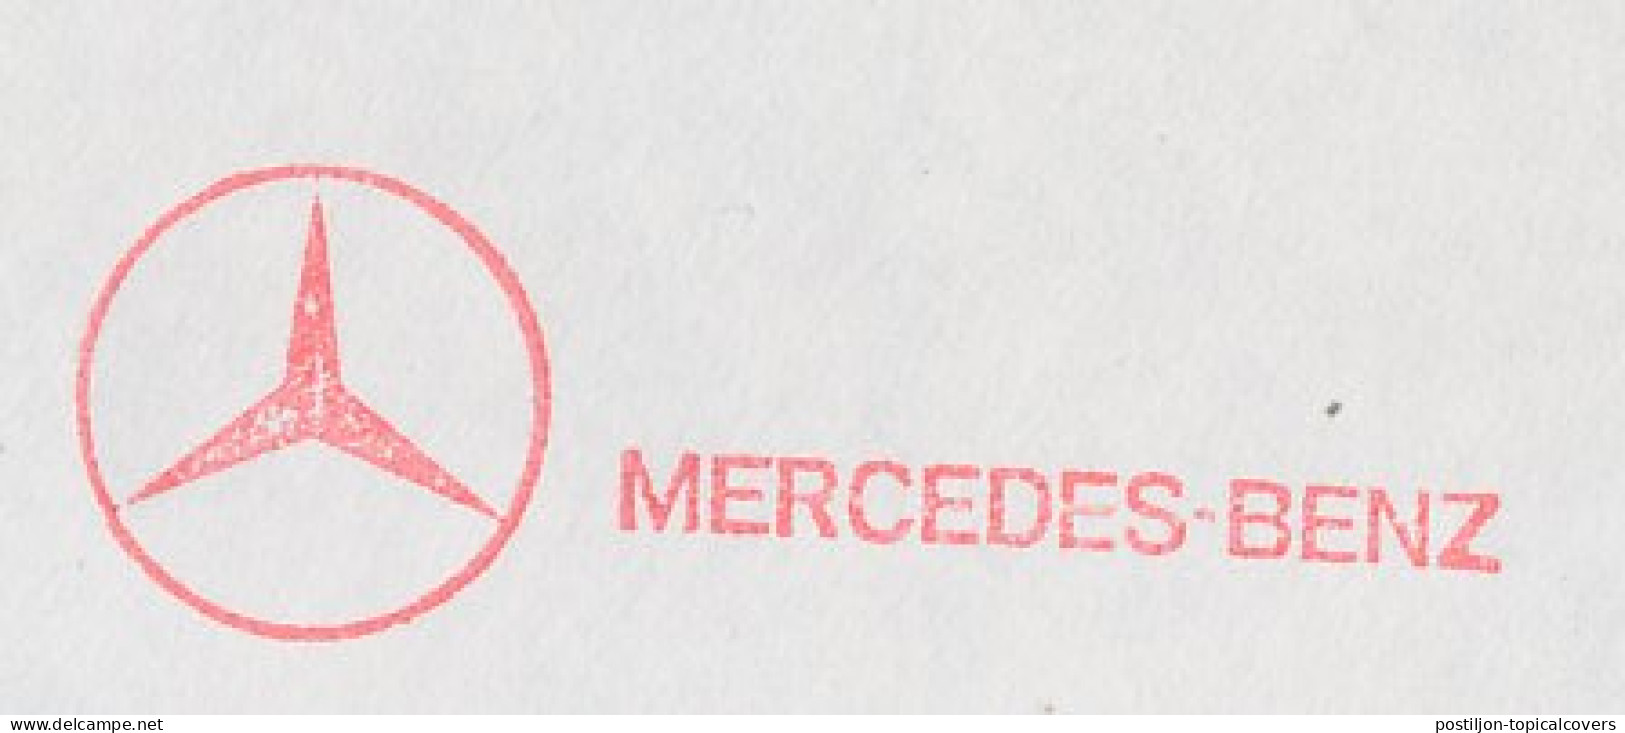 Meter Cover Netherlands 1990 Car - Mercedes Benz  - Voitures